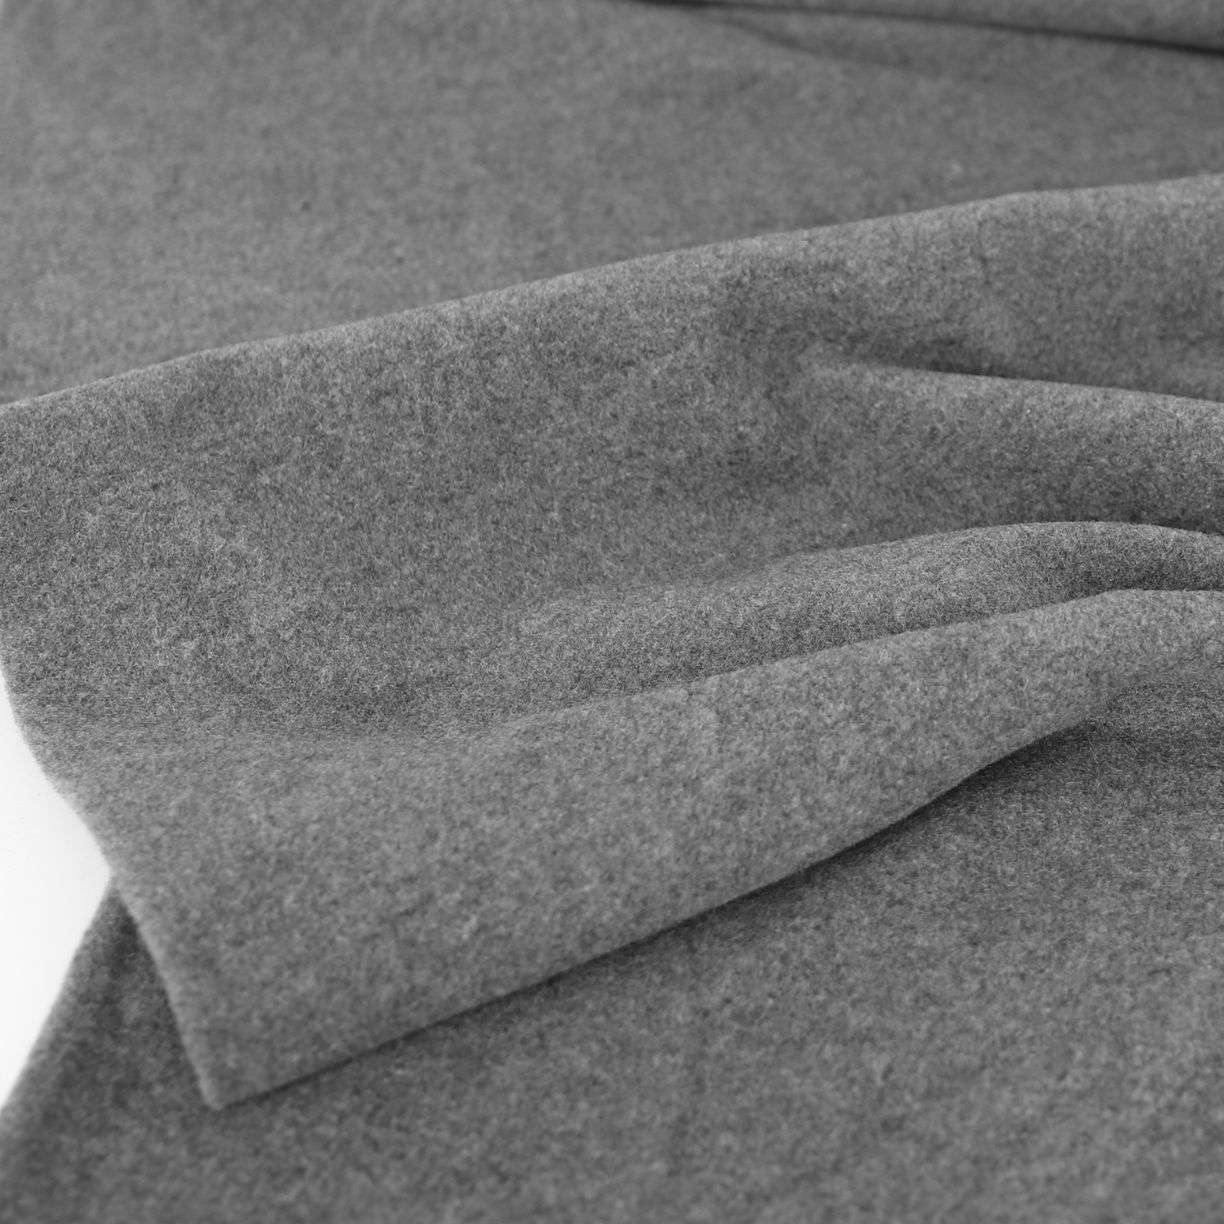 dicker warmer Winter Wollstoff für Mantel Jacke Decke - grau meliert Wolltuch Meterware